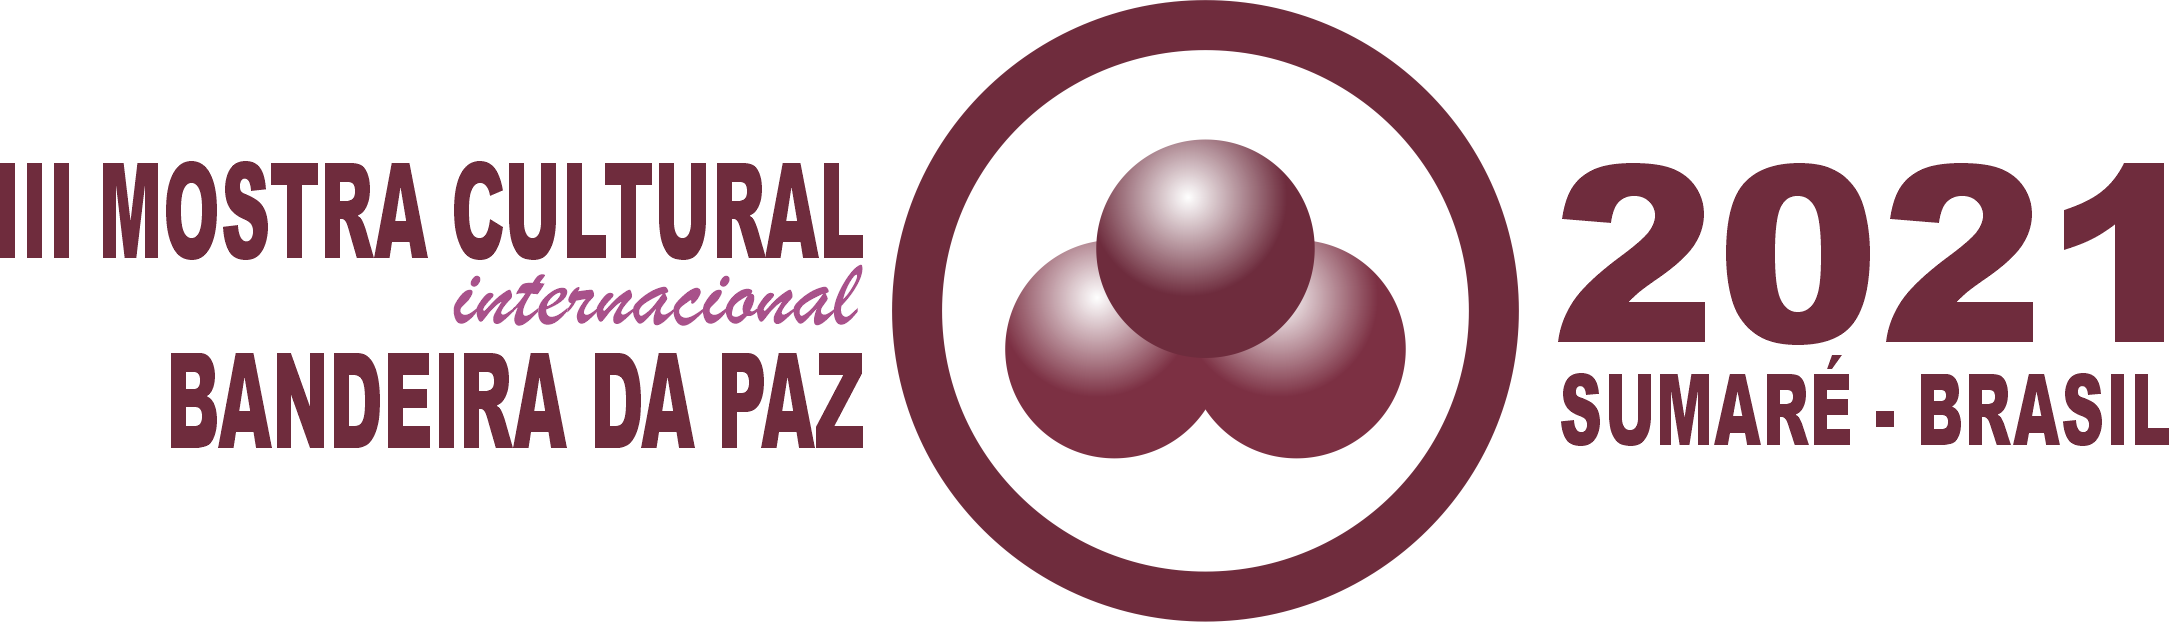 Logo Bnadeira da Paz 2021_Sumare